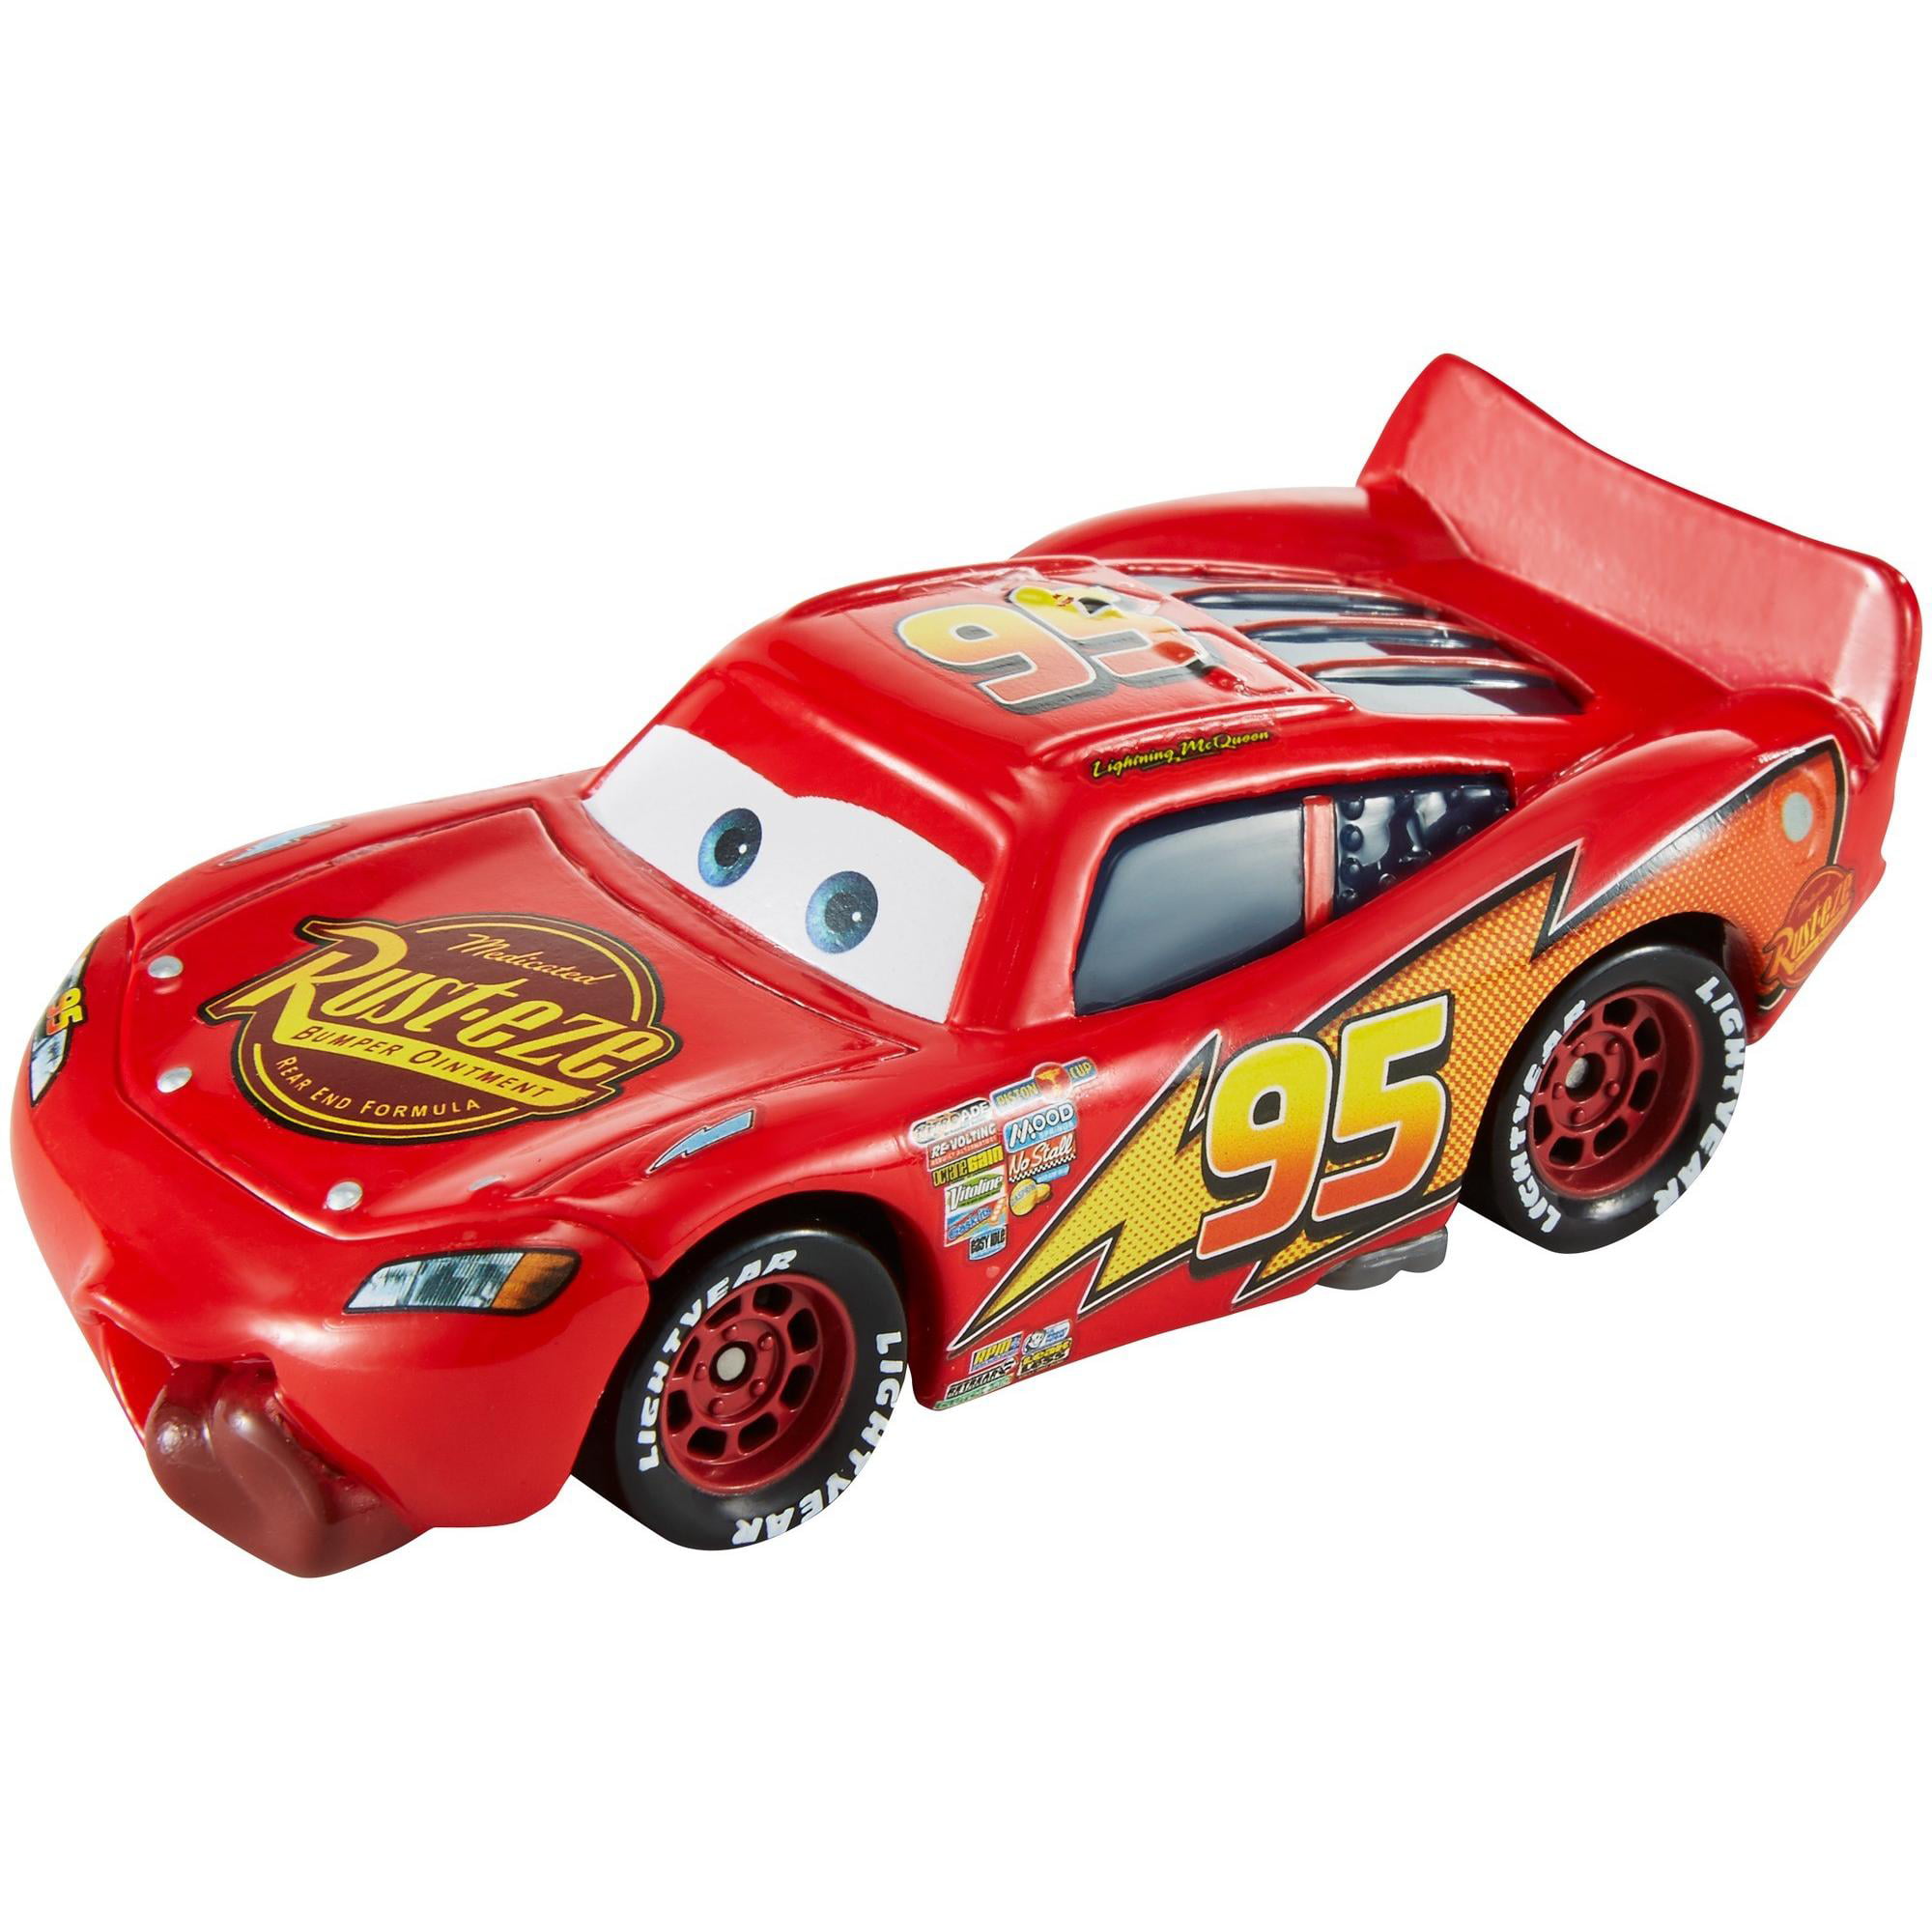 Mattel Disney Pixar Cars Lightning McQueen Choose 1:55 Diecast Model Toy Loose 